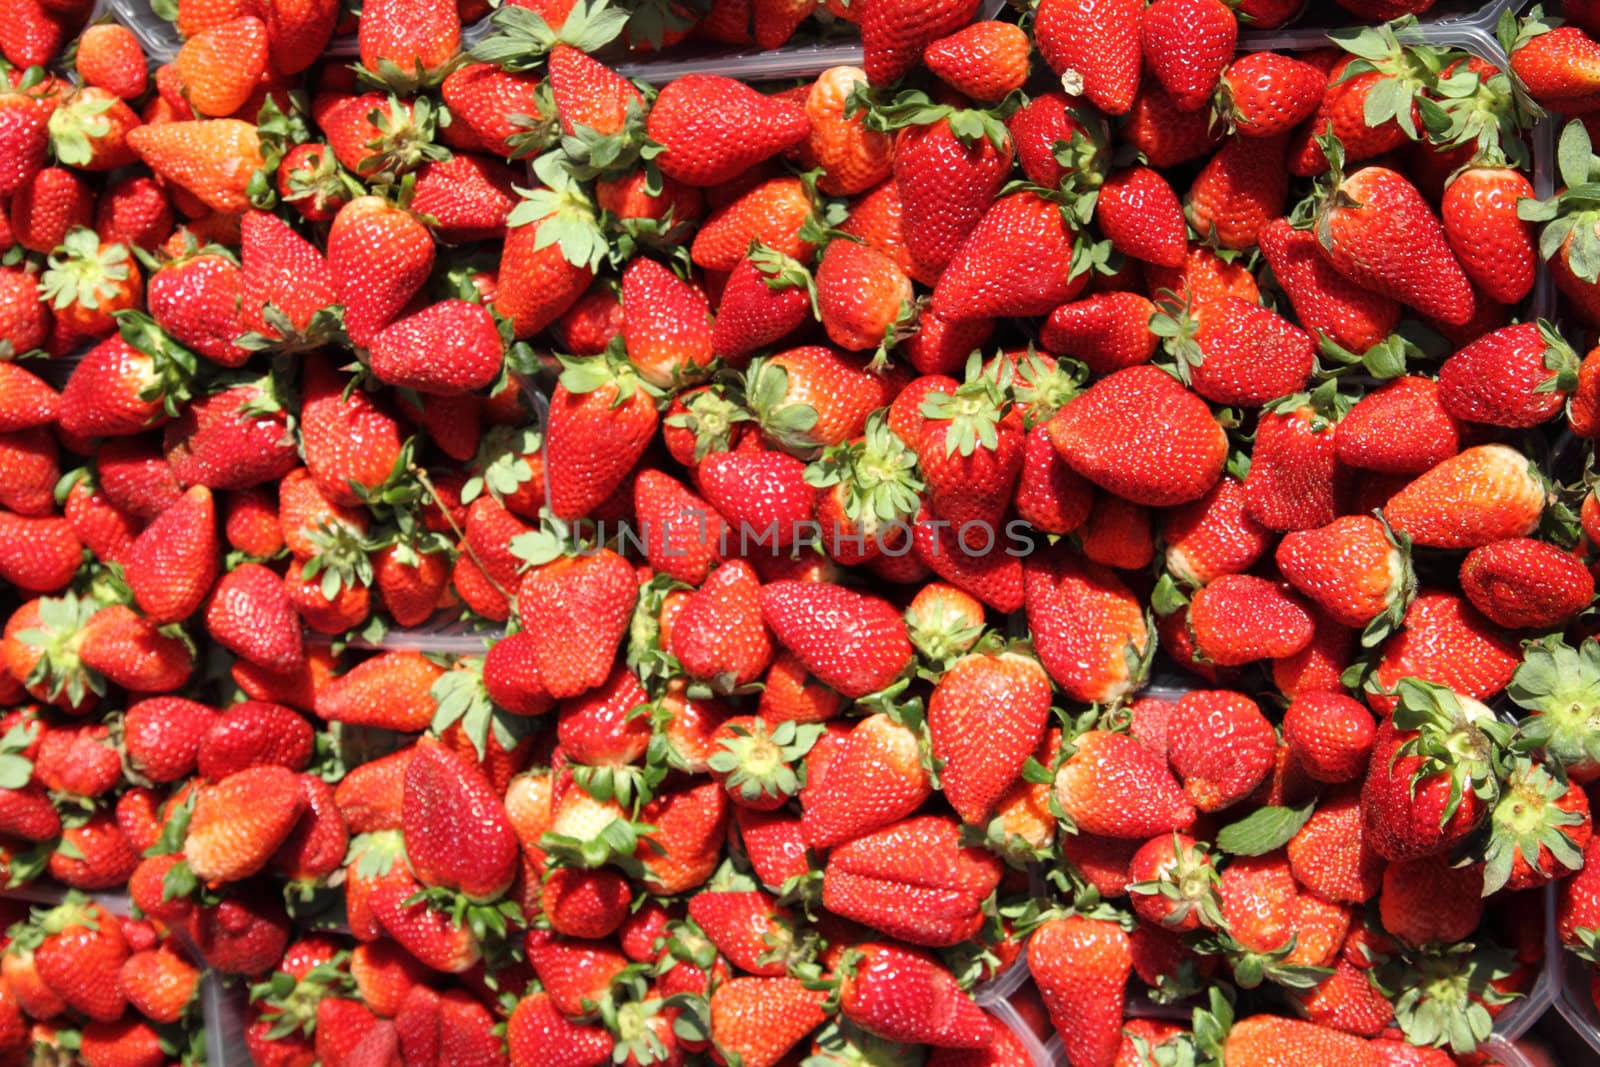 strawberries background by jonnysek